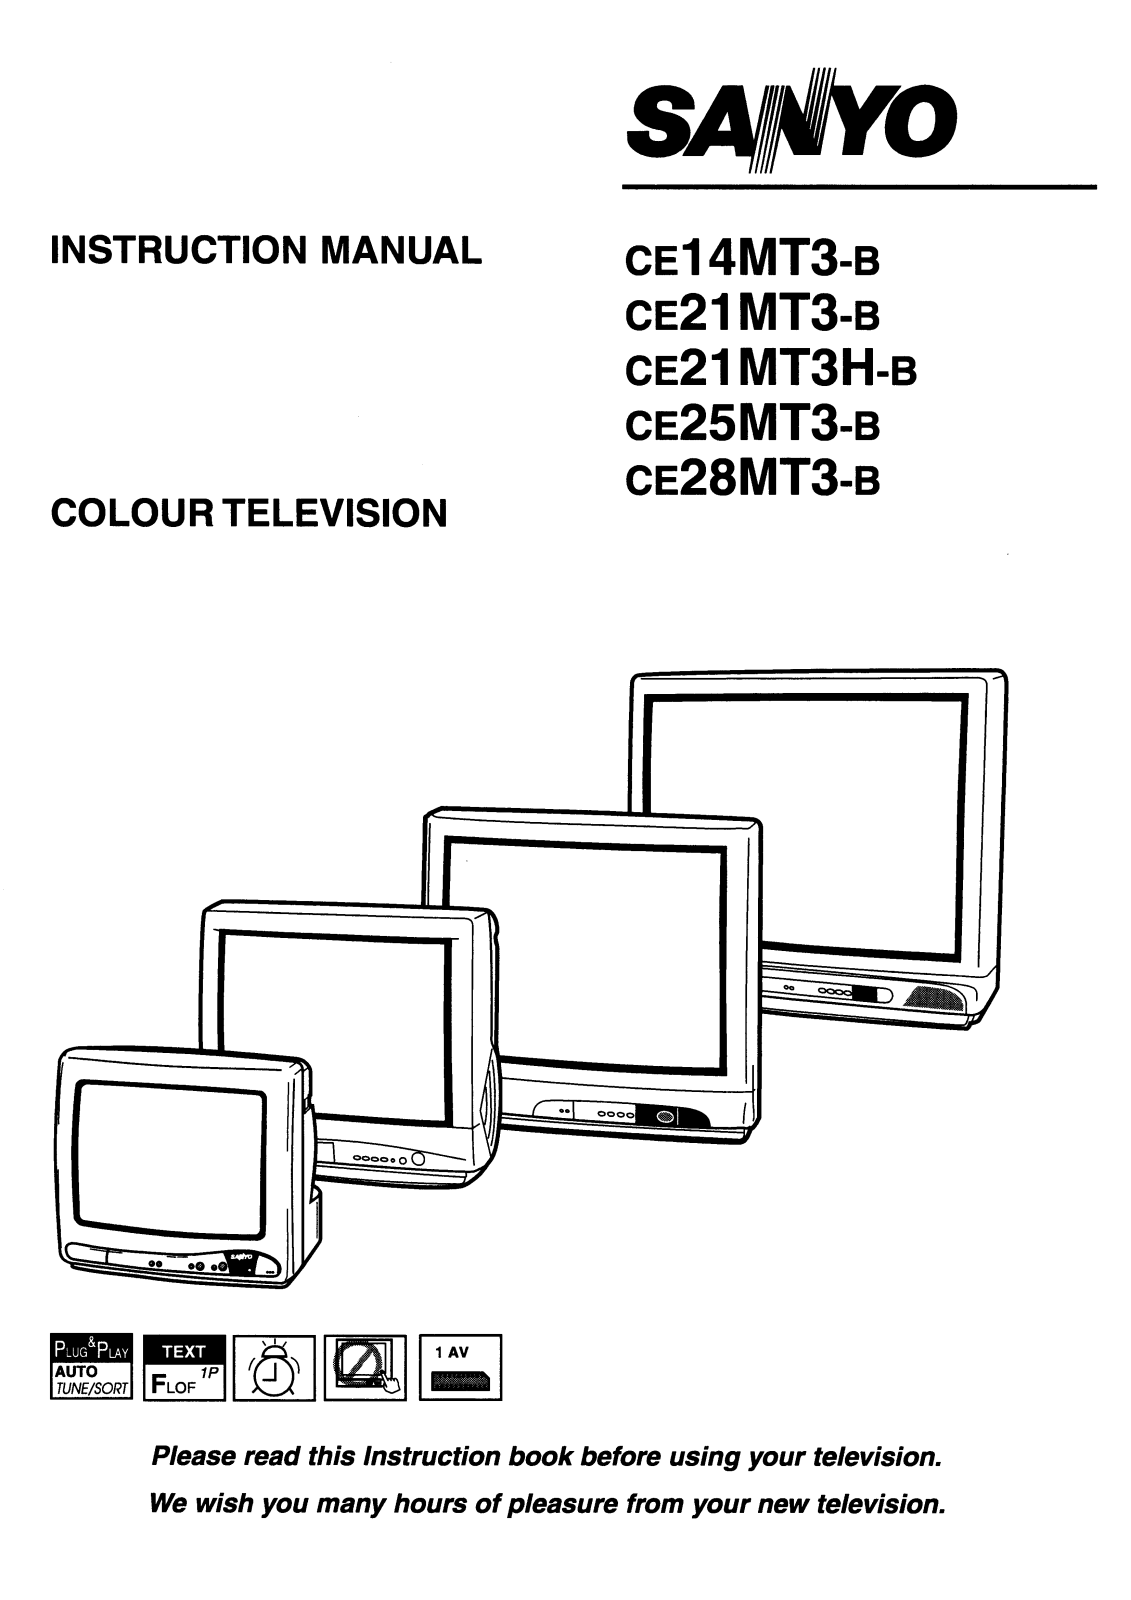 Sanyo CE14MT3-B, CE21MT3-B, CE21MT3H-B, CE25MT3-B, CE28MT3-B Instruction Manual